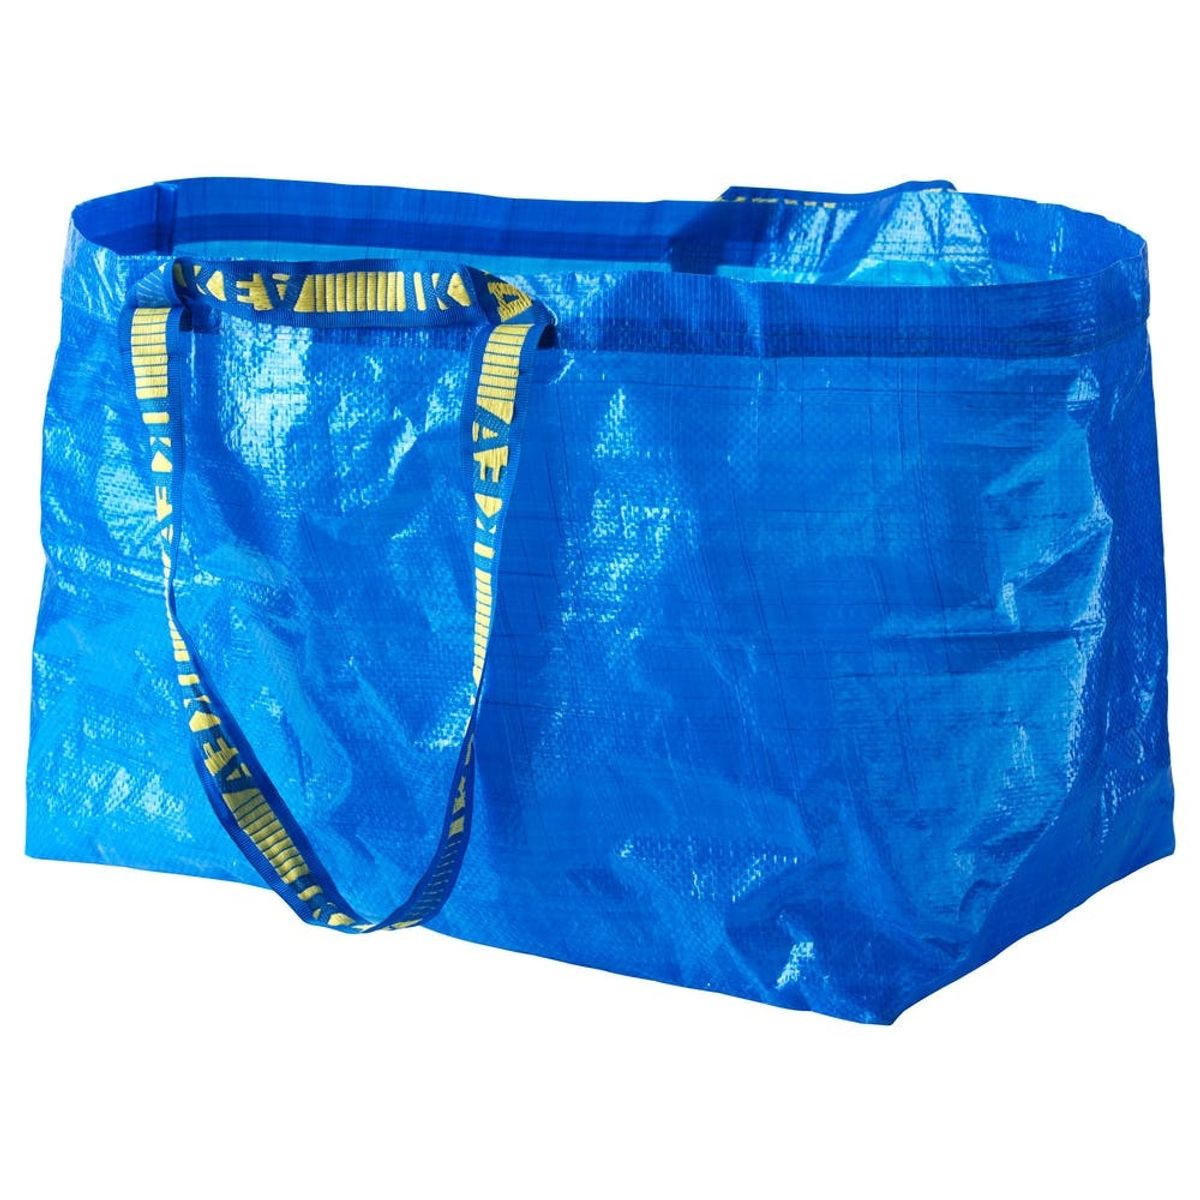 Balenciaga’s New $2,145 Bag Looks Eerily Like Ikea’s 99-Cent Tote